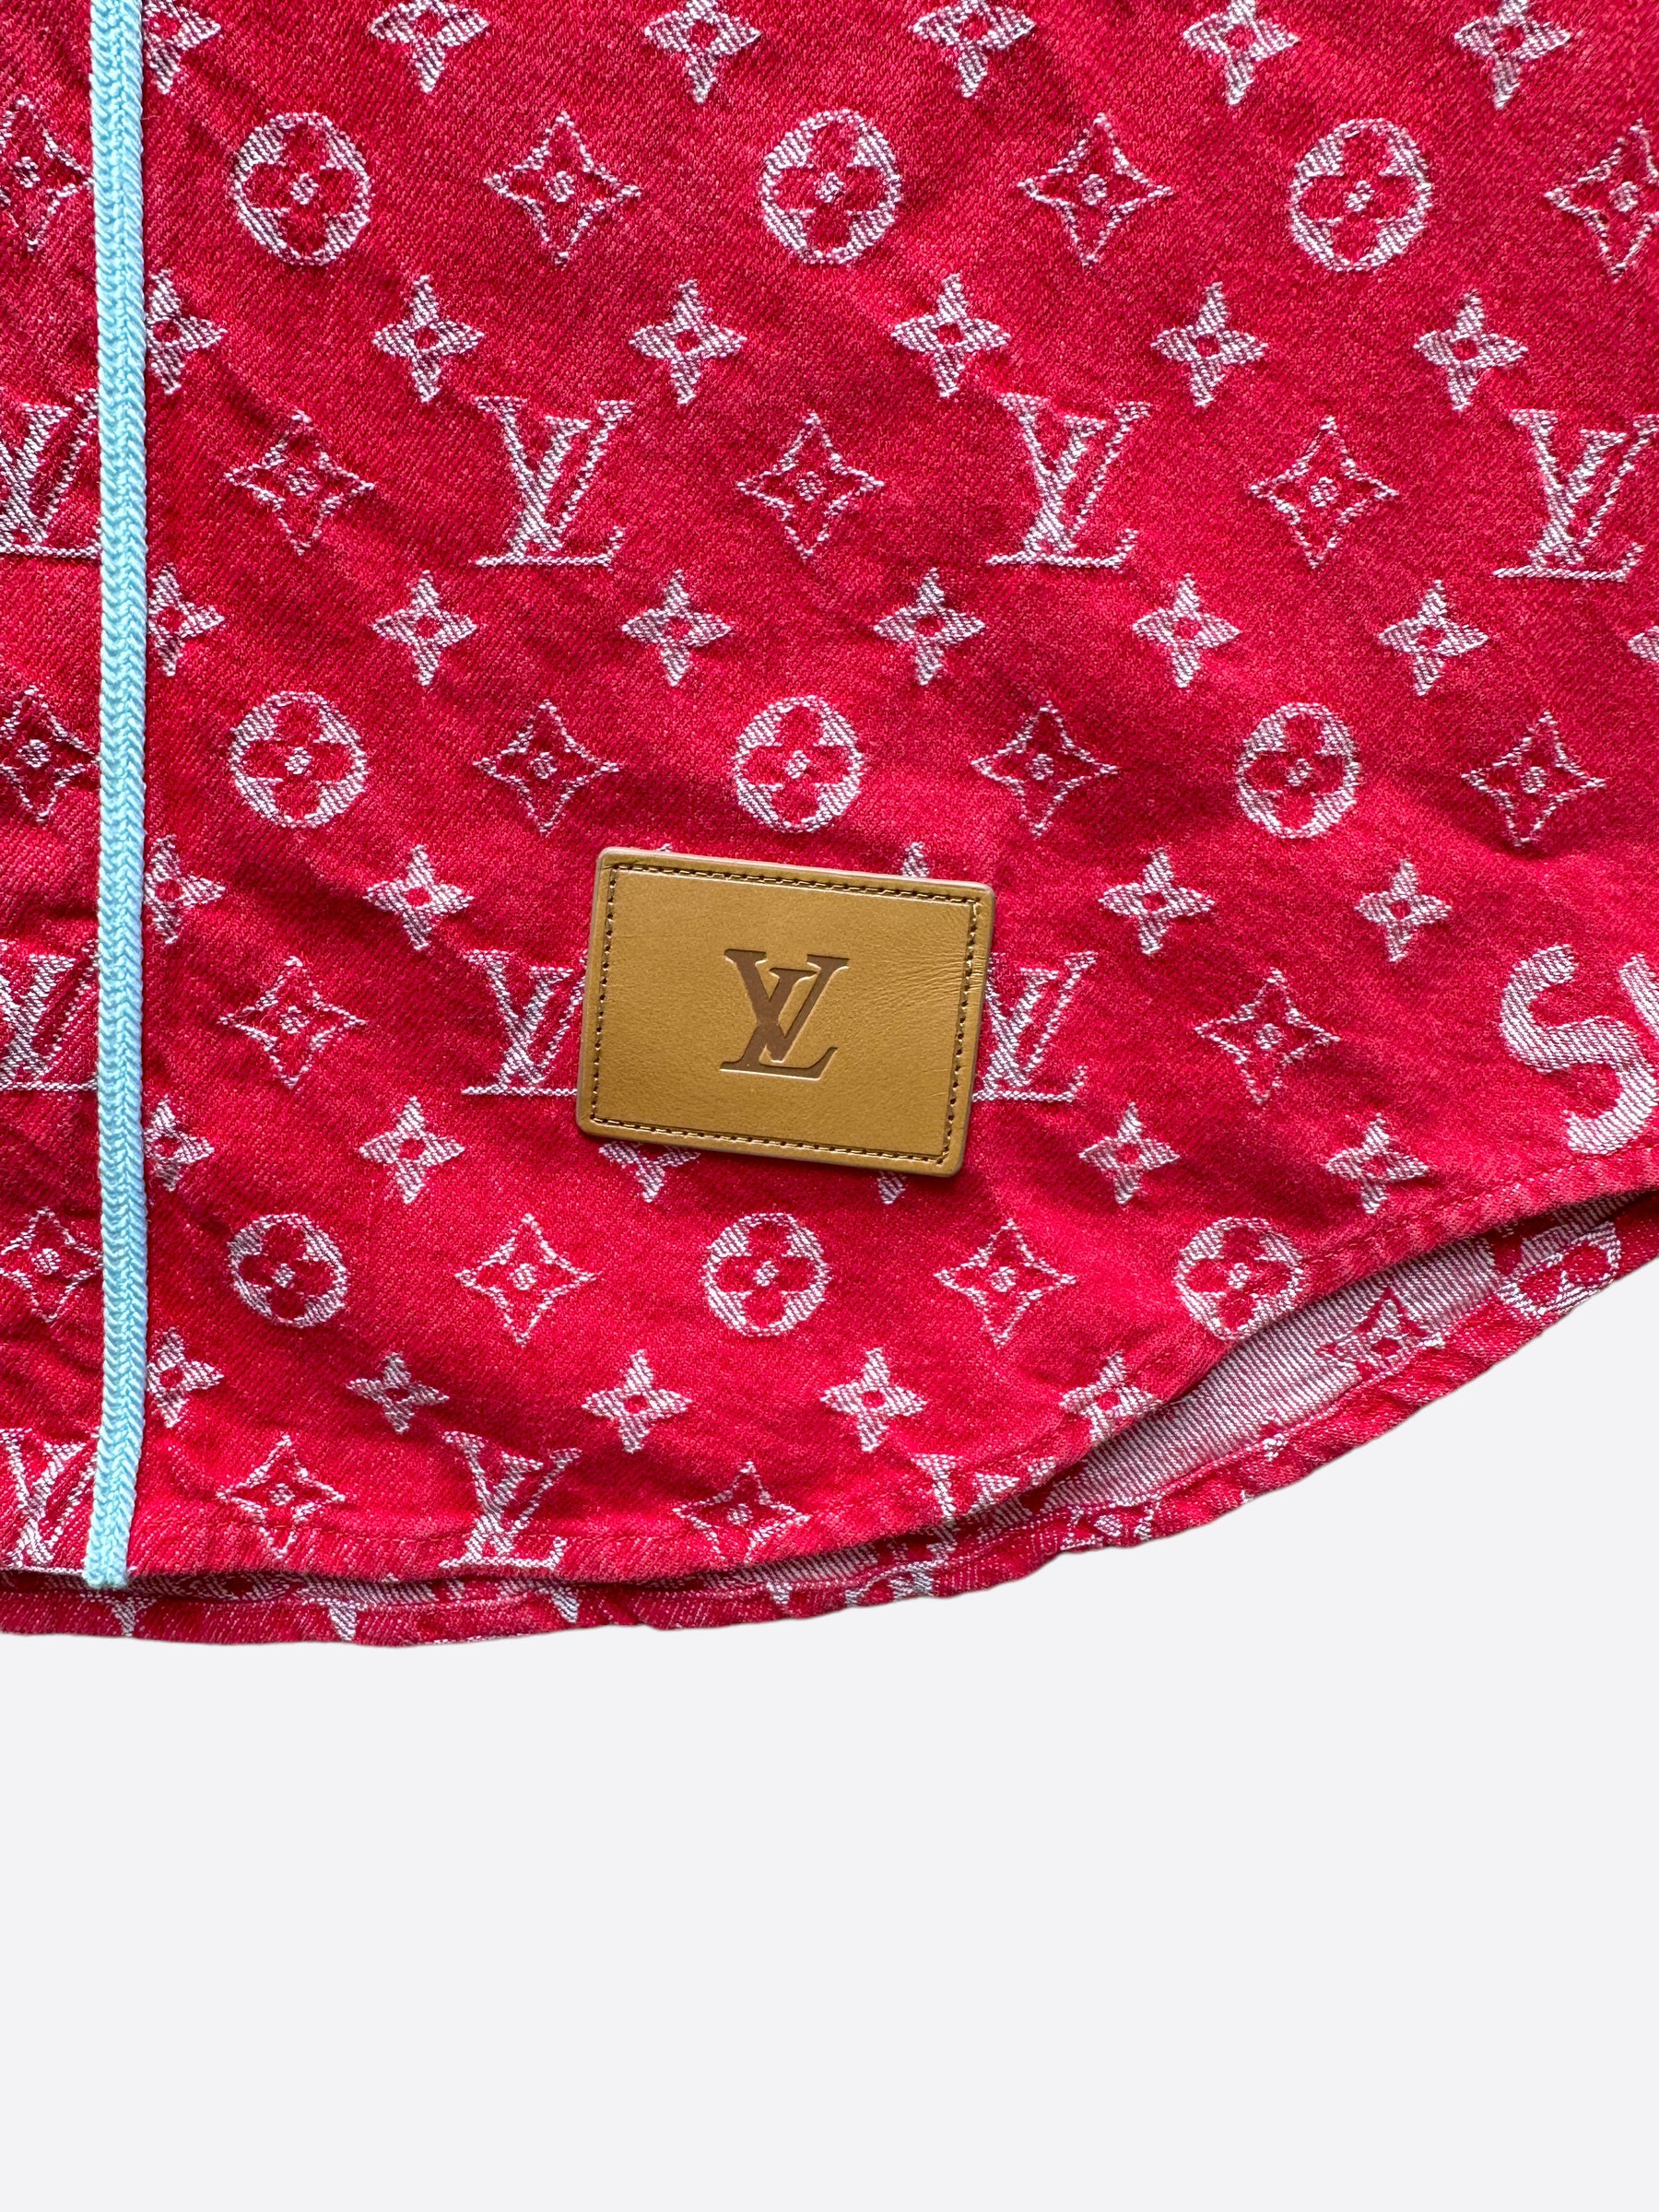 Louis Vuitton Supreme full red baseball jersey shirt